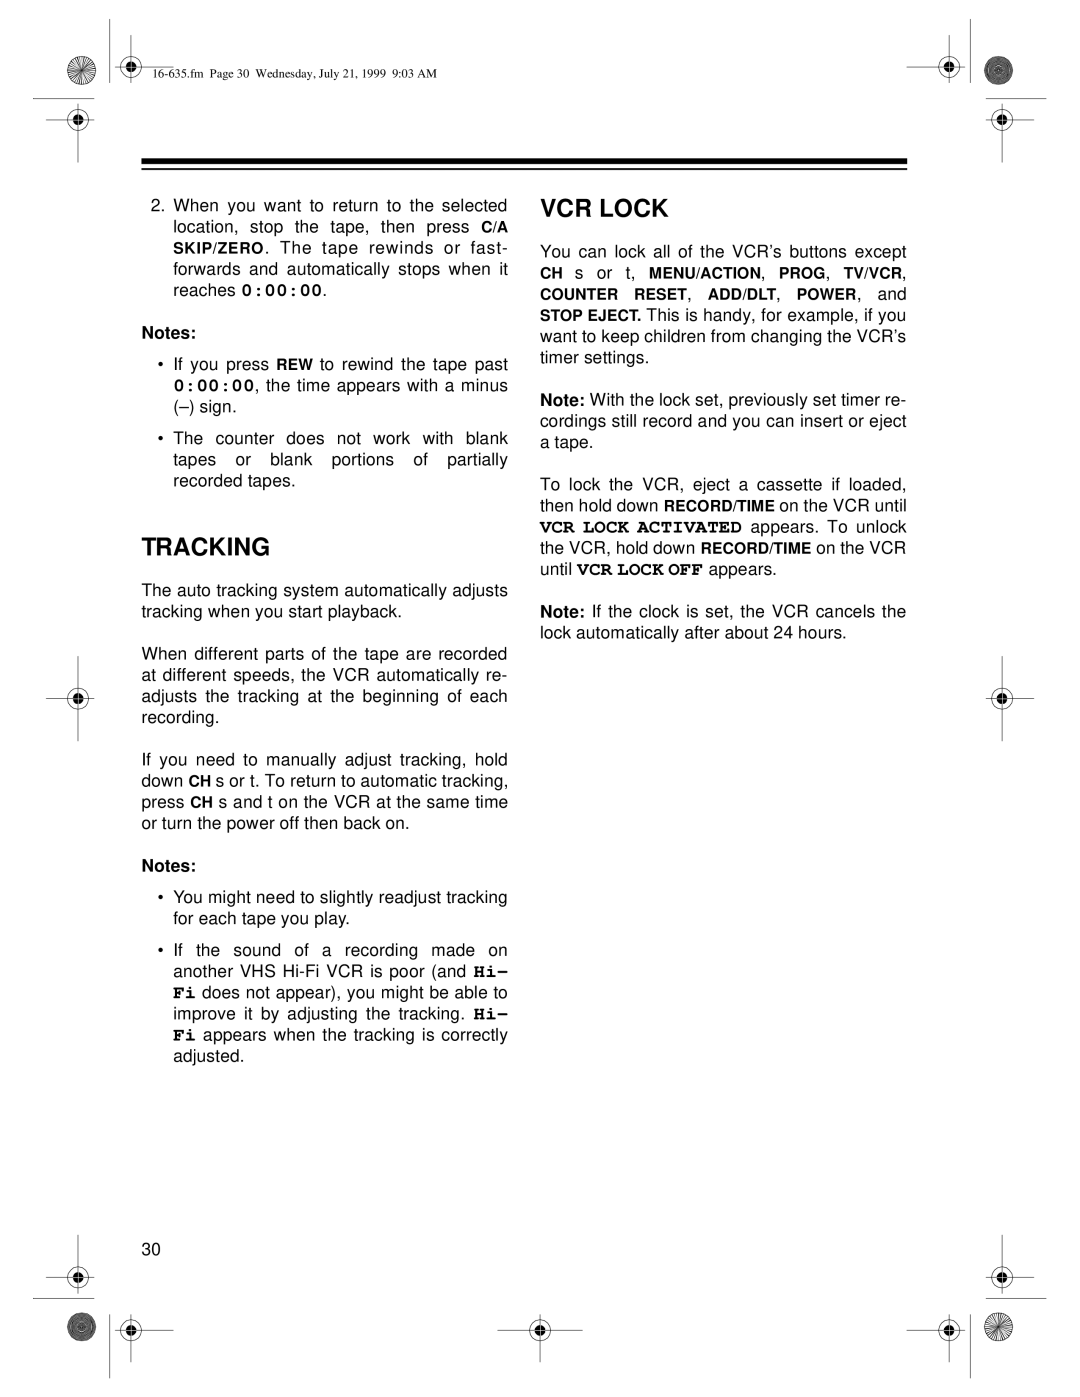 Radio Shack 66 owner manual Tracking, Vcr Lock 